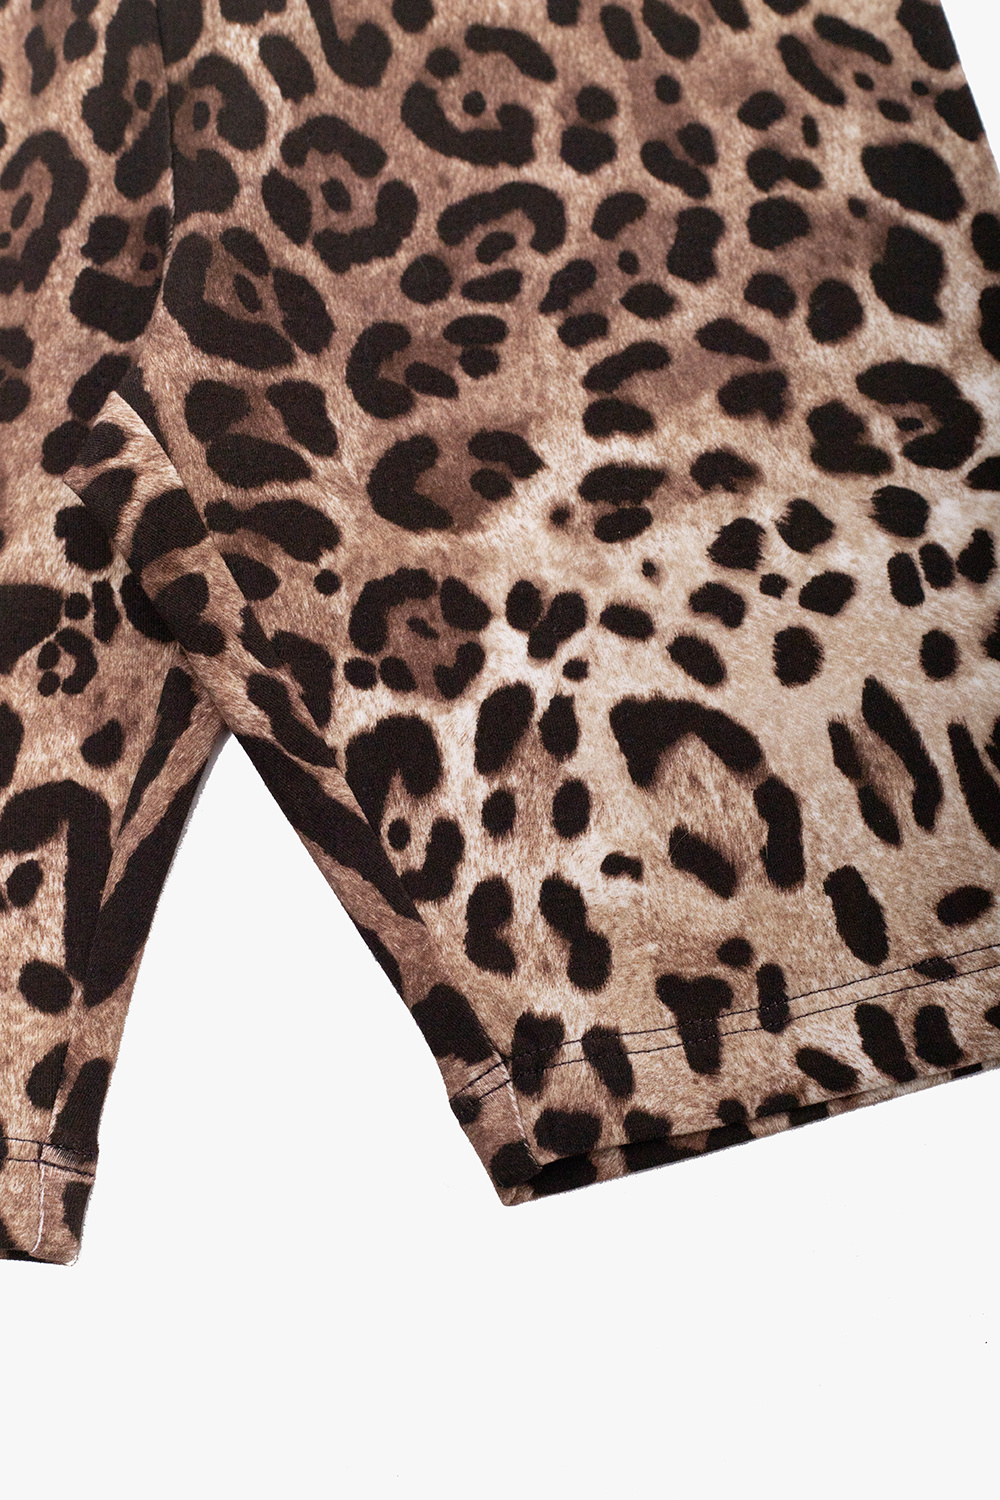 Dolce & Gabbana 'Dolce' box clutch Leggings with animal print